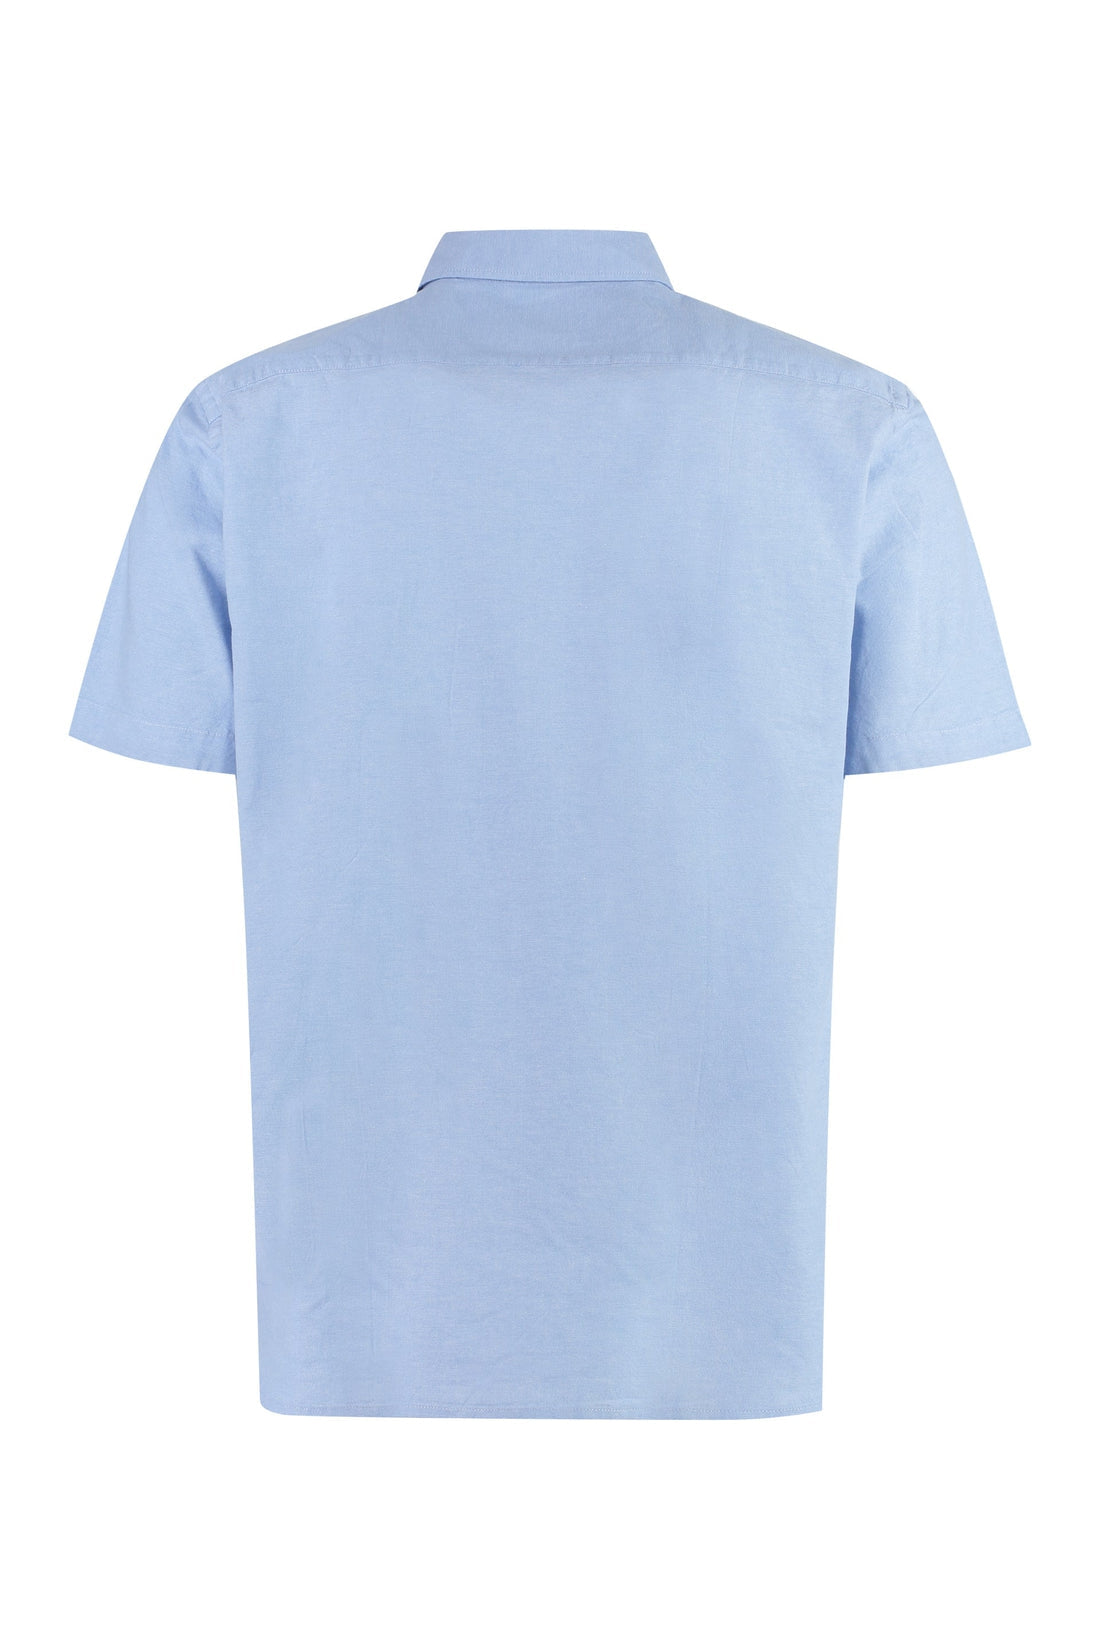 BOSS-OUTLET-SALE-Short sleeve cotton shirt-ARCHIVIST